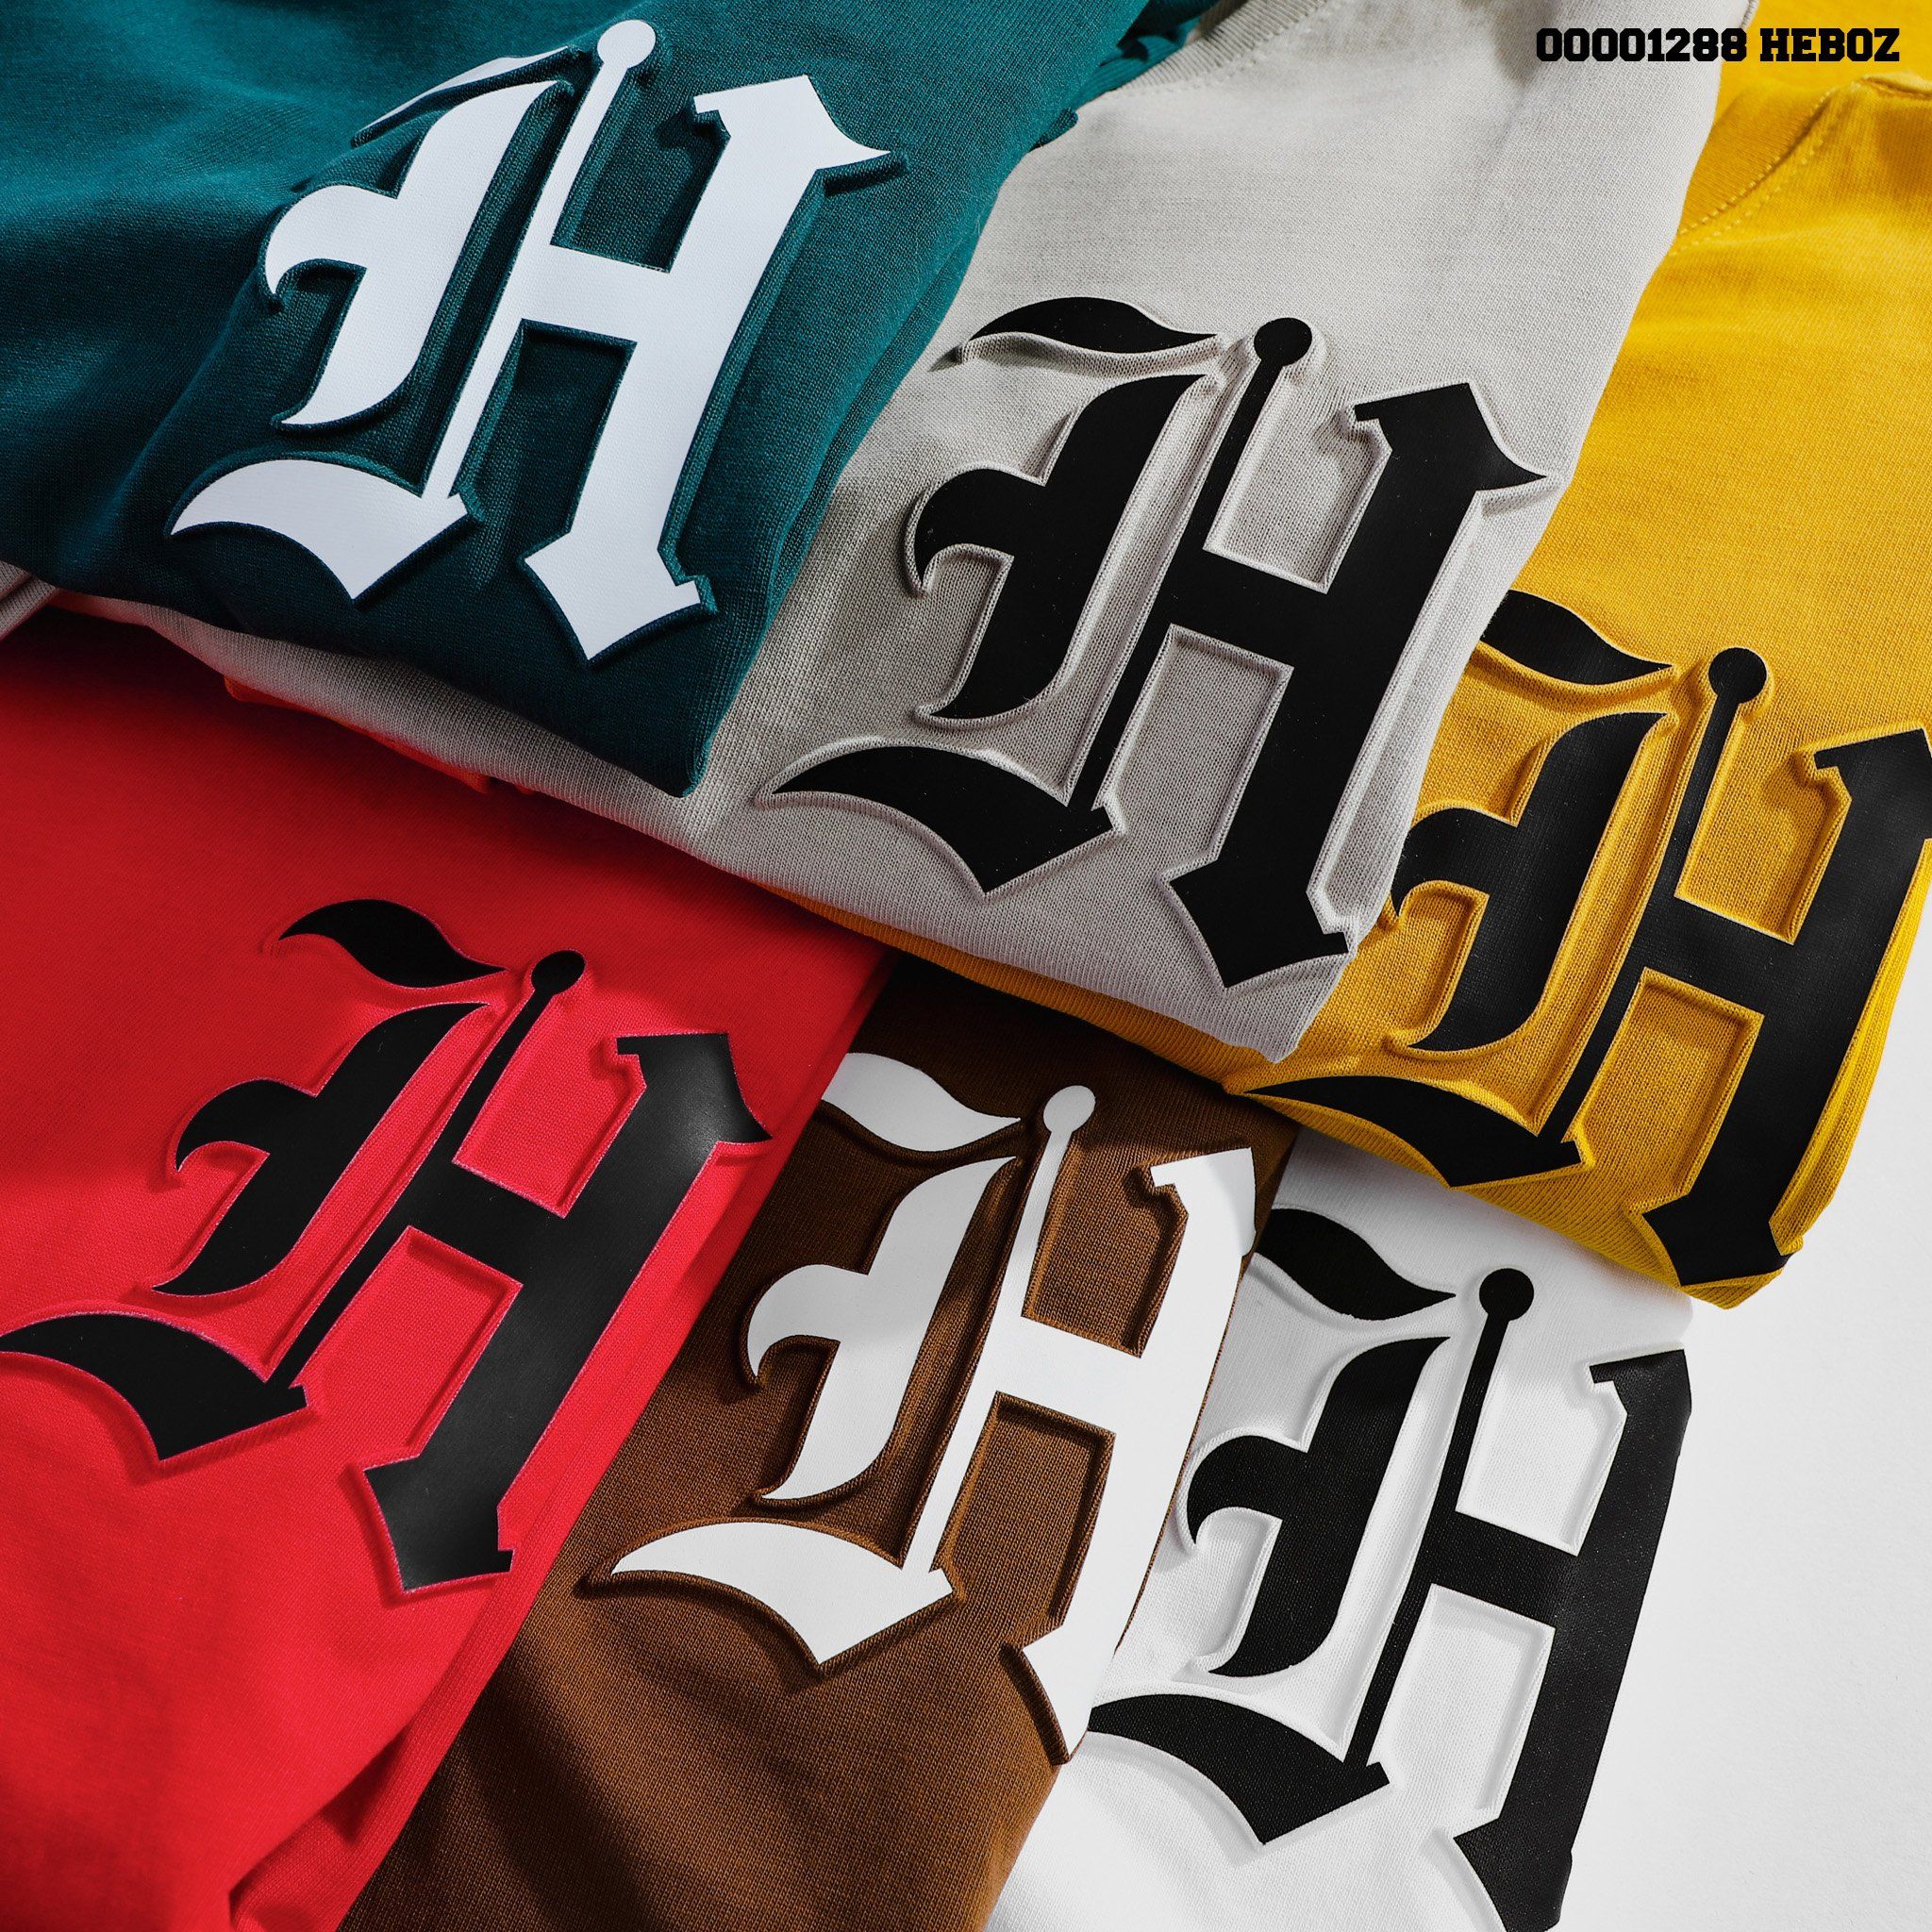  Áo thun basic logo nổi H Heboz 8M - 00001288 